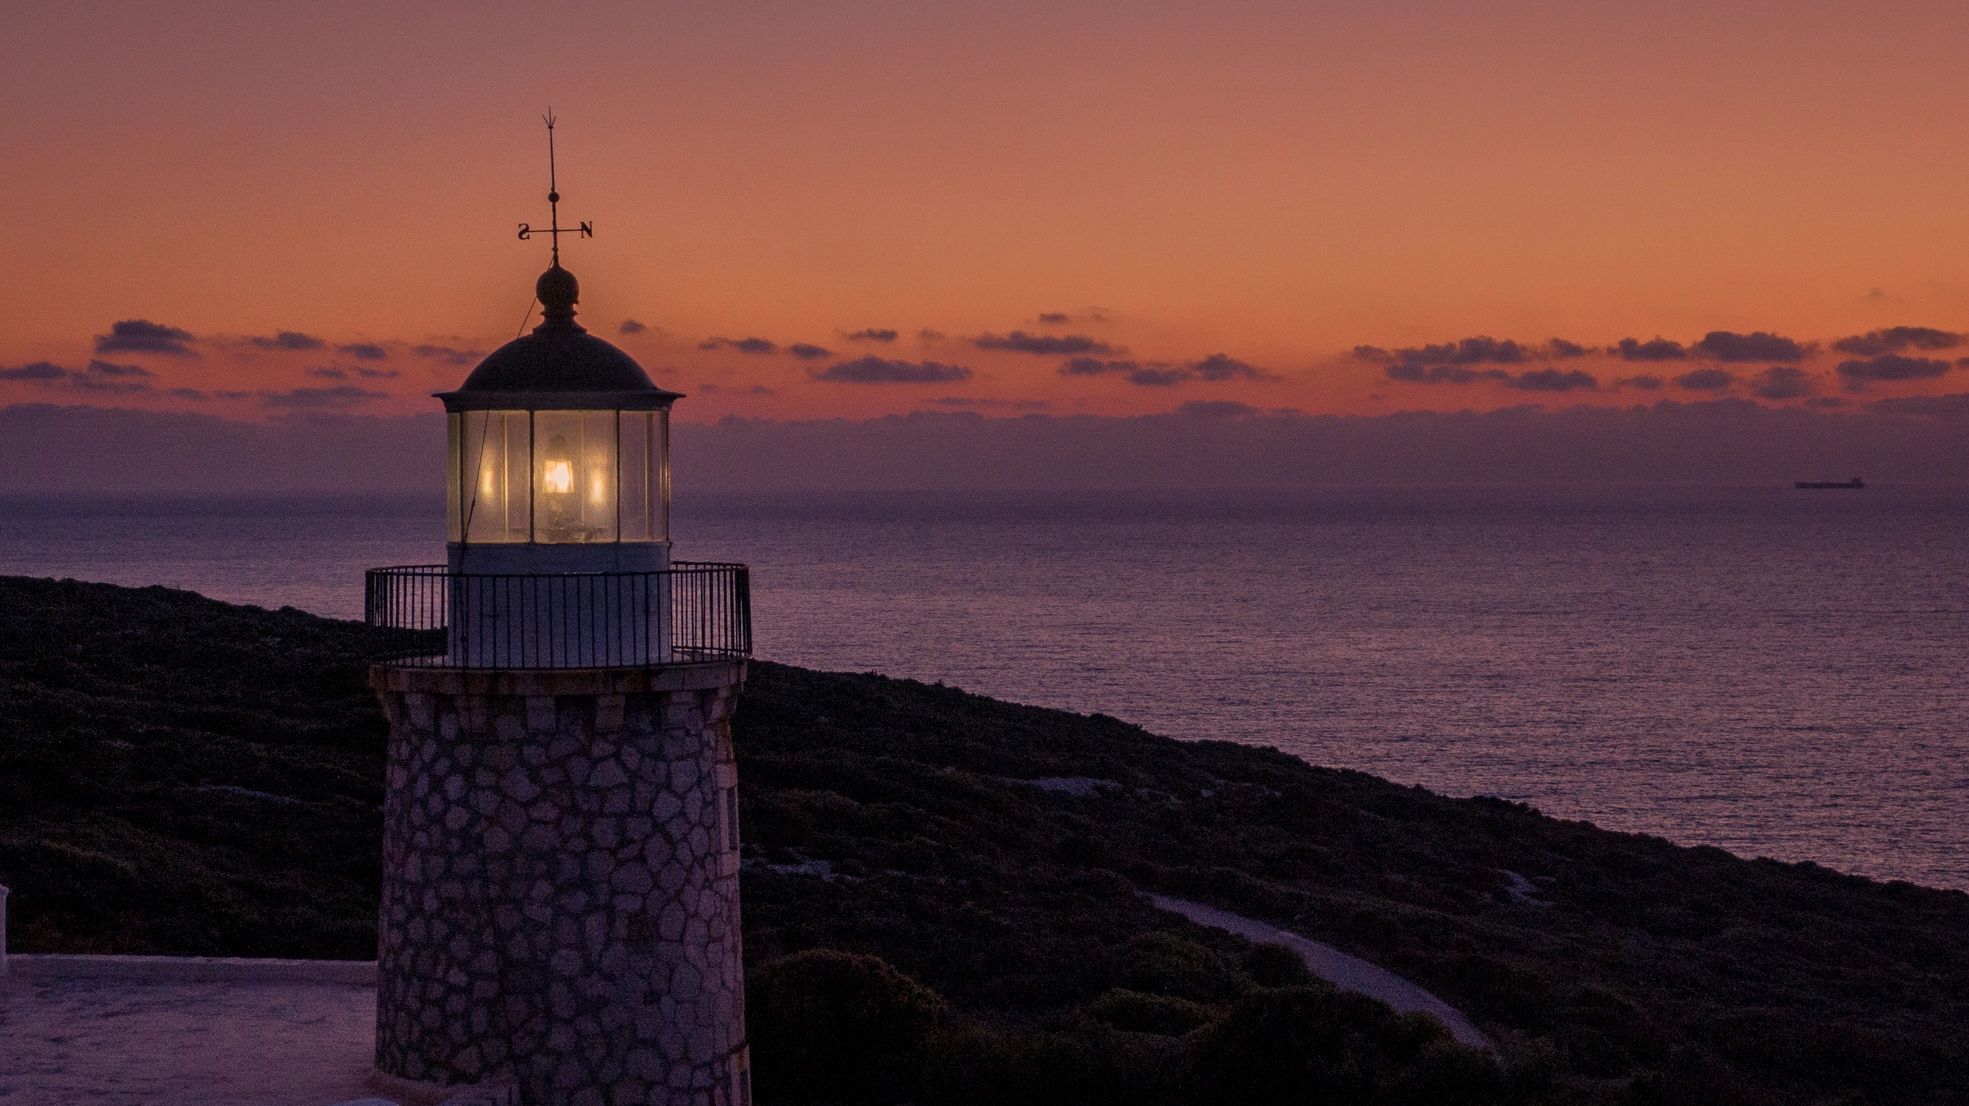 Skinari Lighthouse